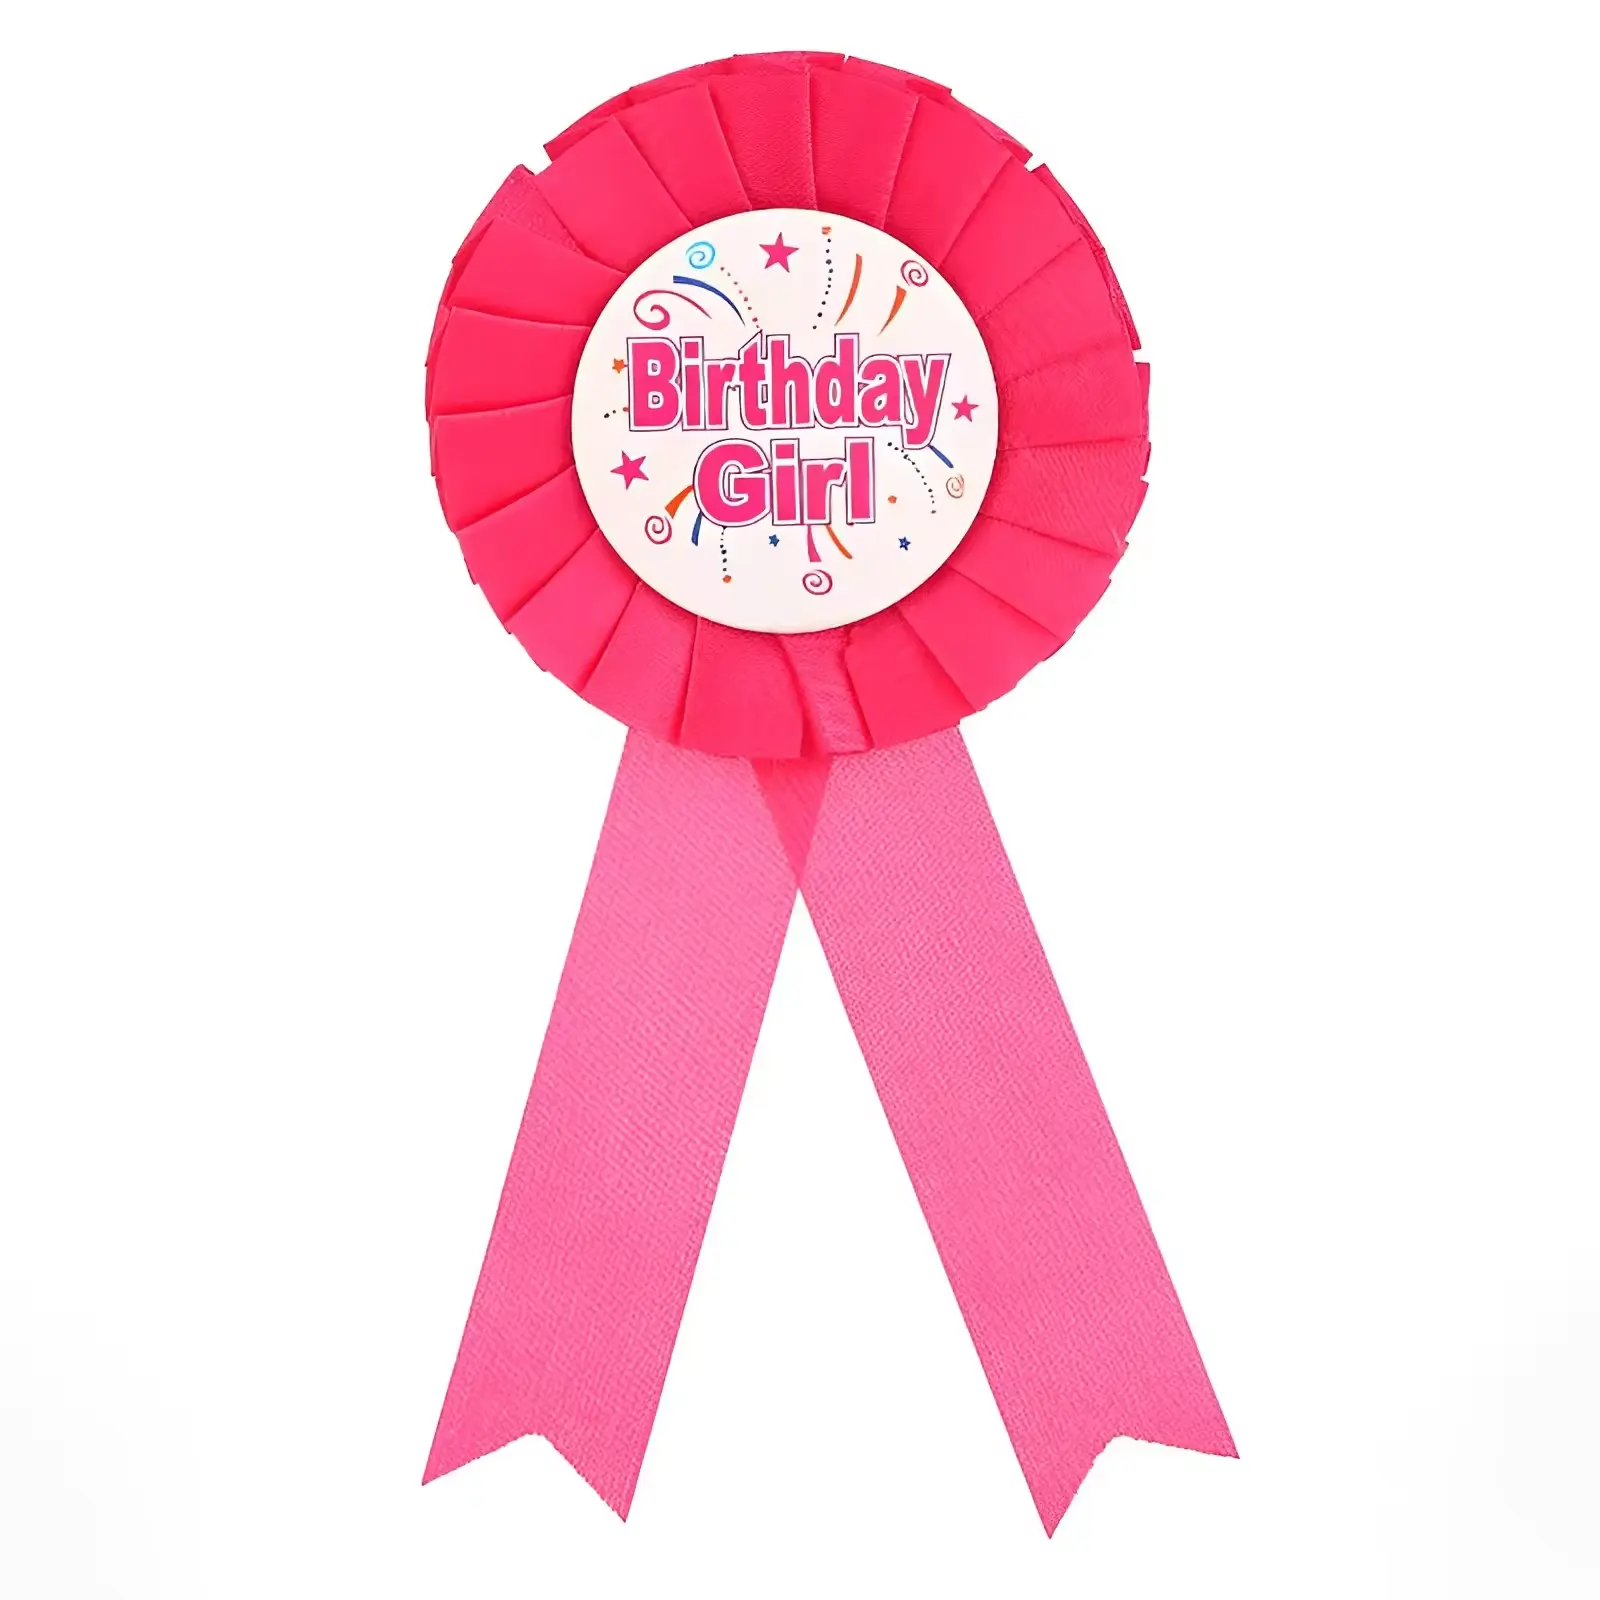 Personalizar tela satinada cumpleaños niña hojalata insignia Pin fiesta suministros niñas mujeres roseta botón alfileres fiesta accesorio broche